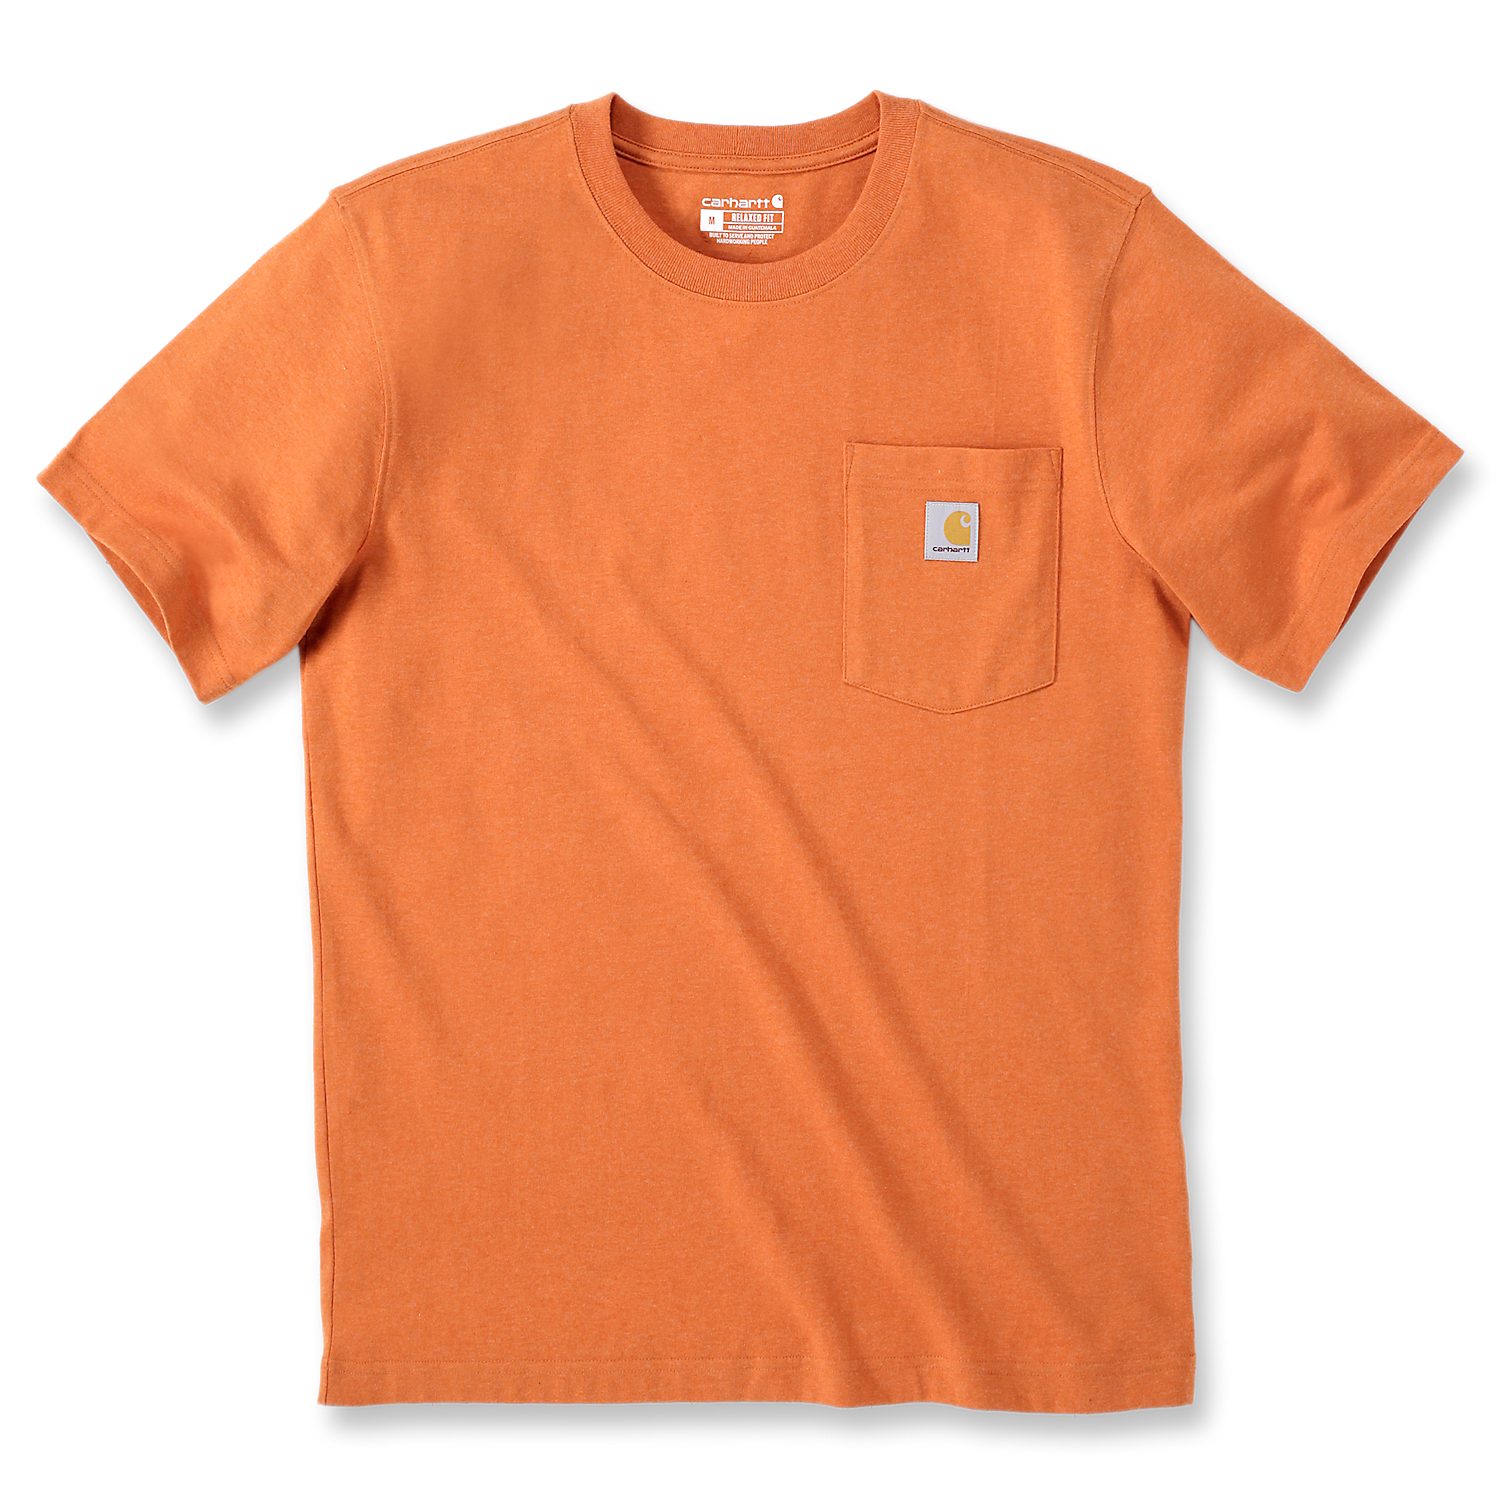 T-Shirt K87 Pocket Carhartt Marmalade Fit Relaxed